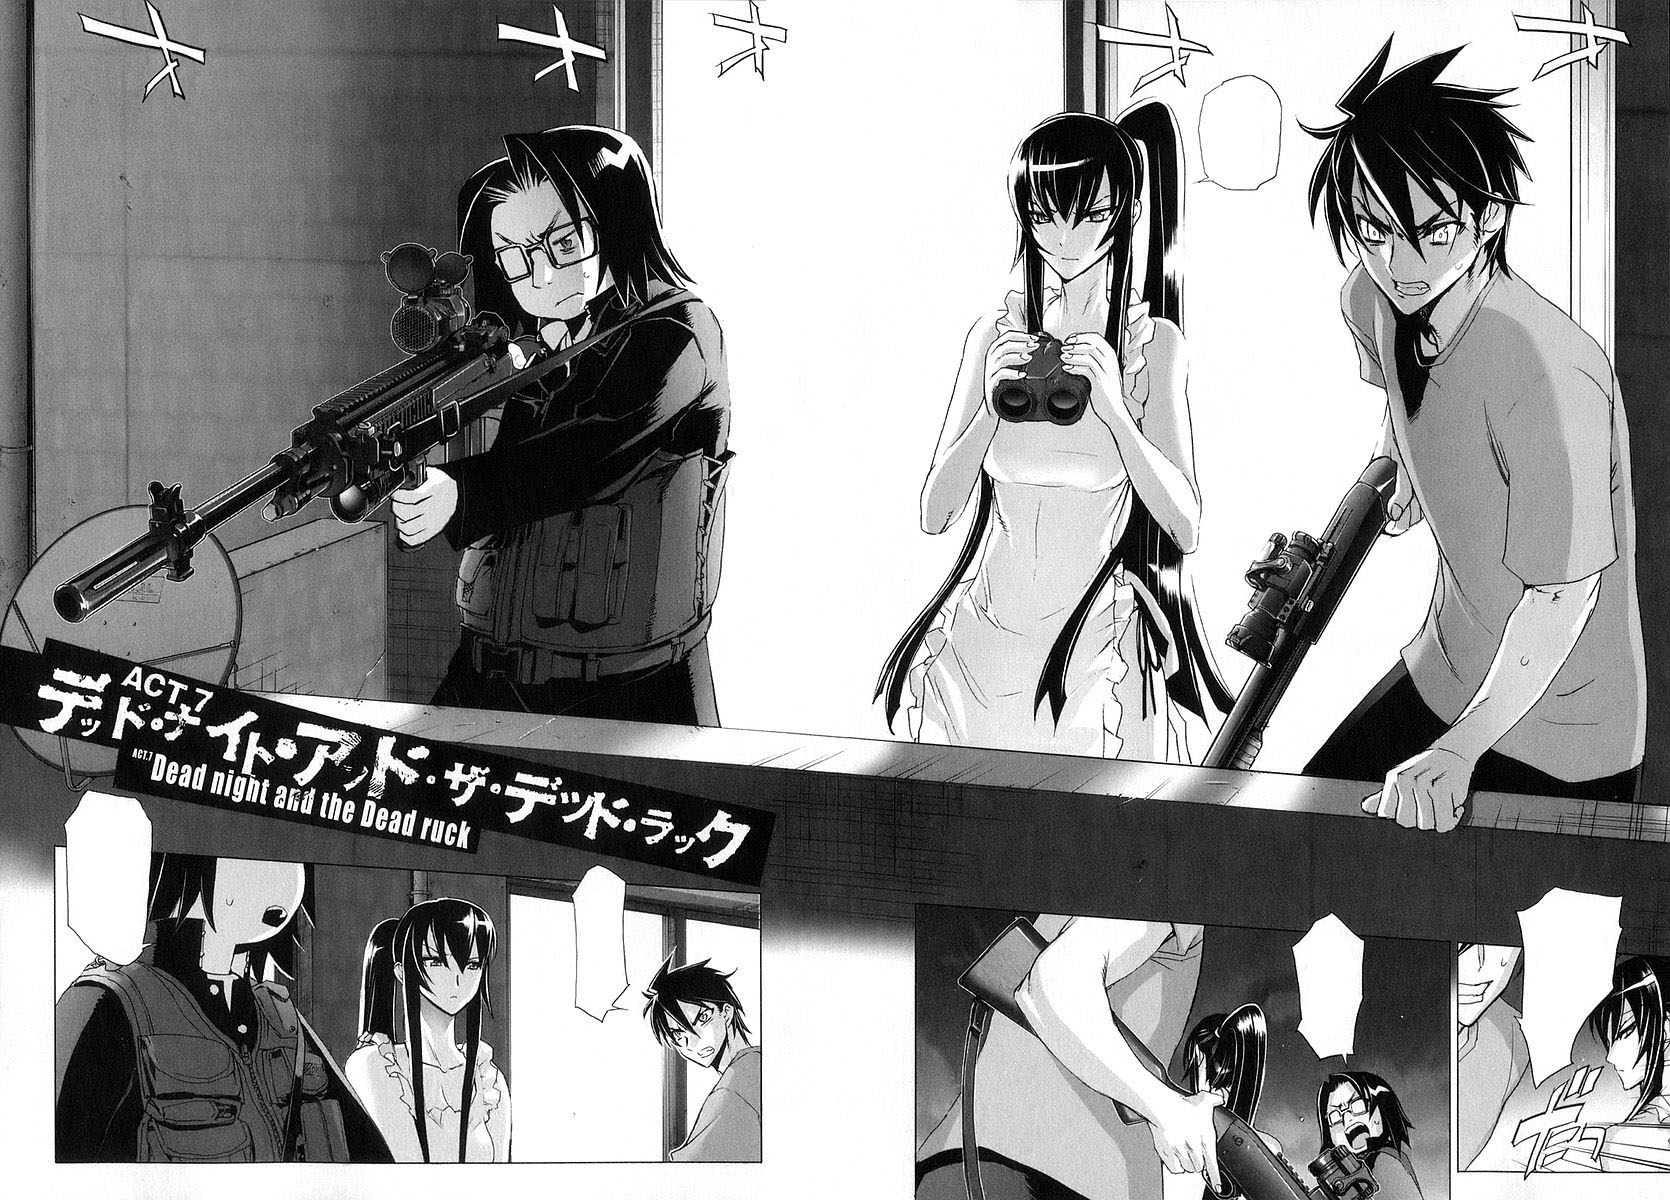 Manga High School Of The Dead